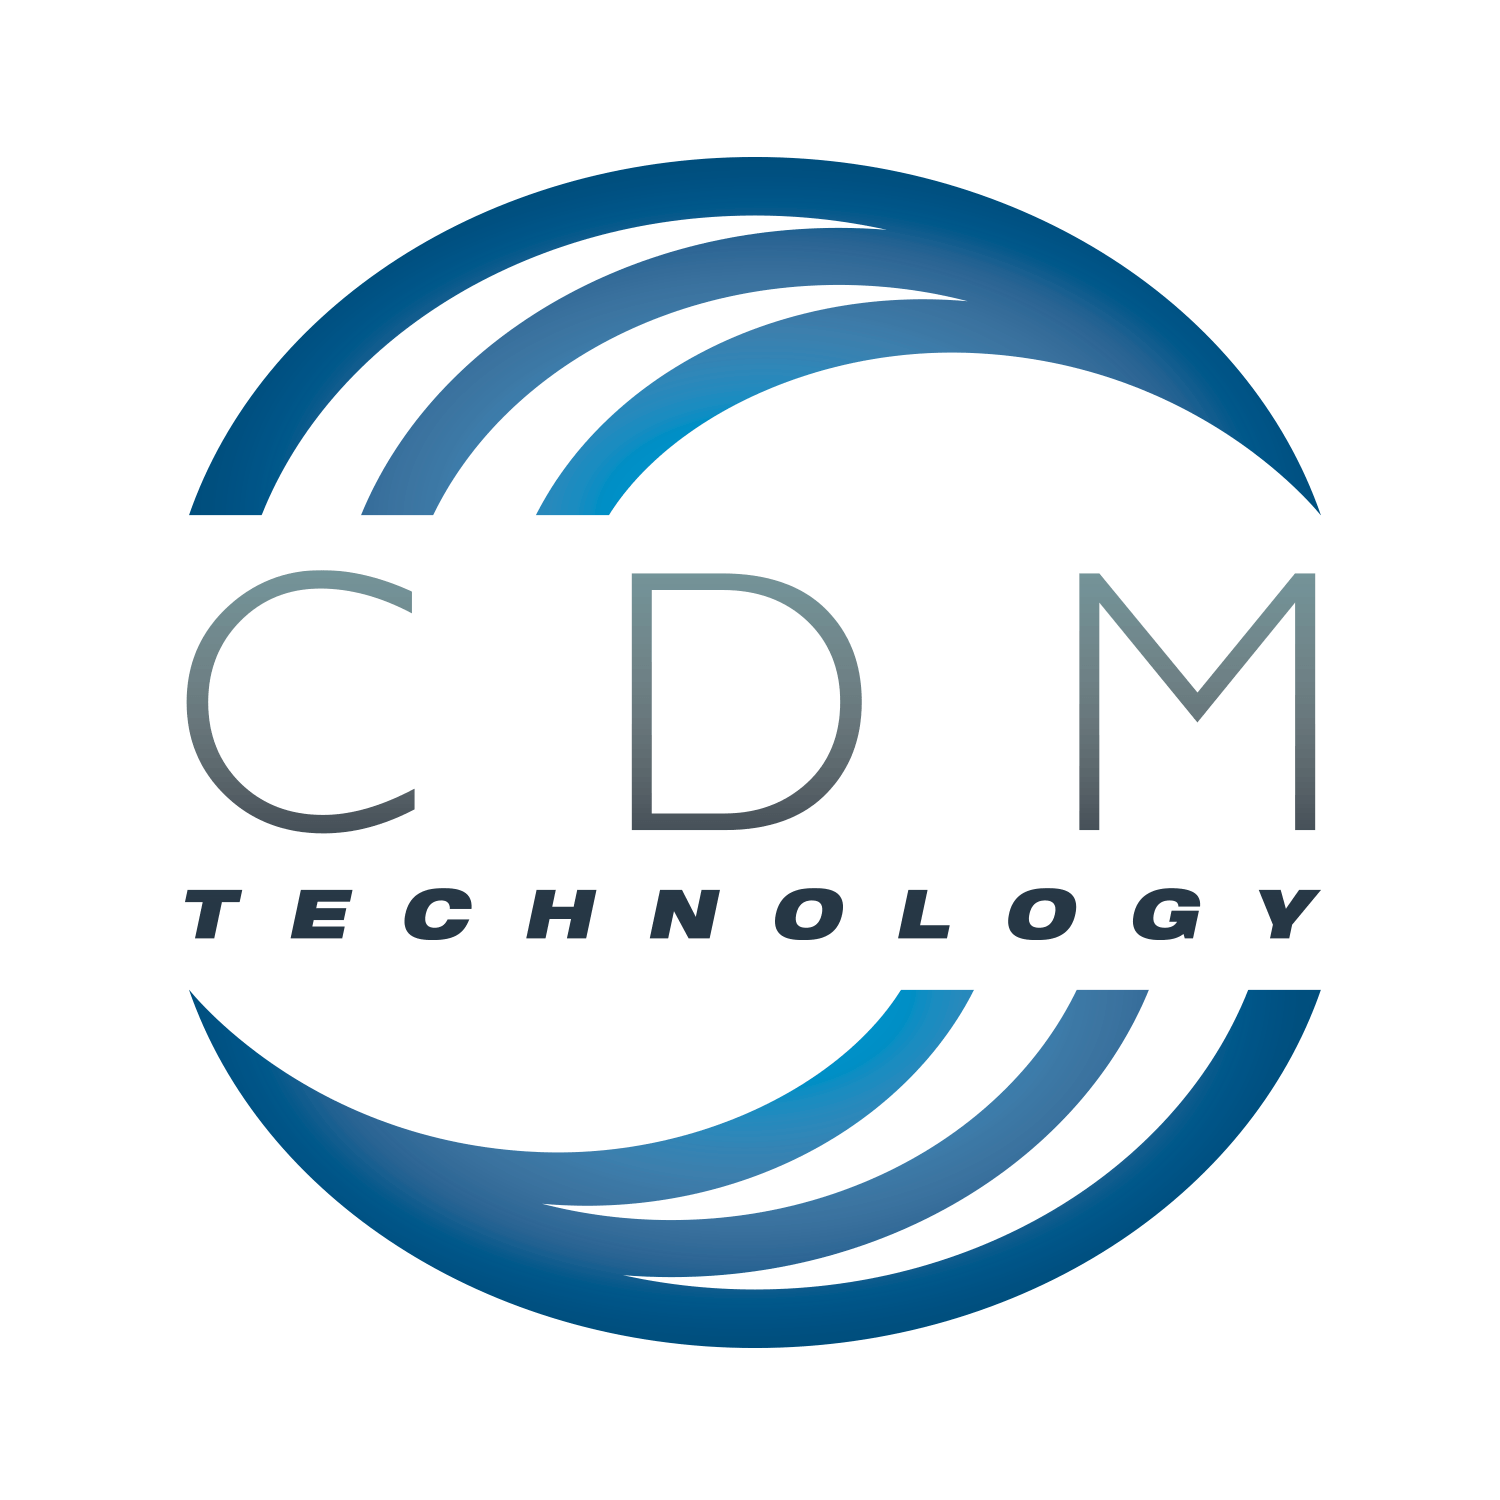 CDM Logo - CDM Technology. IT, Digital Marketing, and Project Management